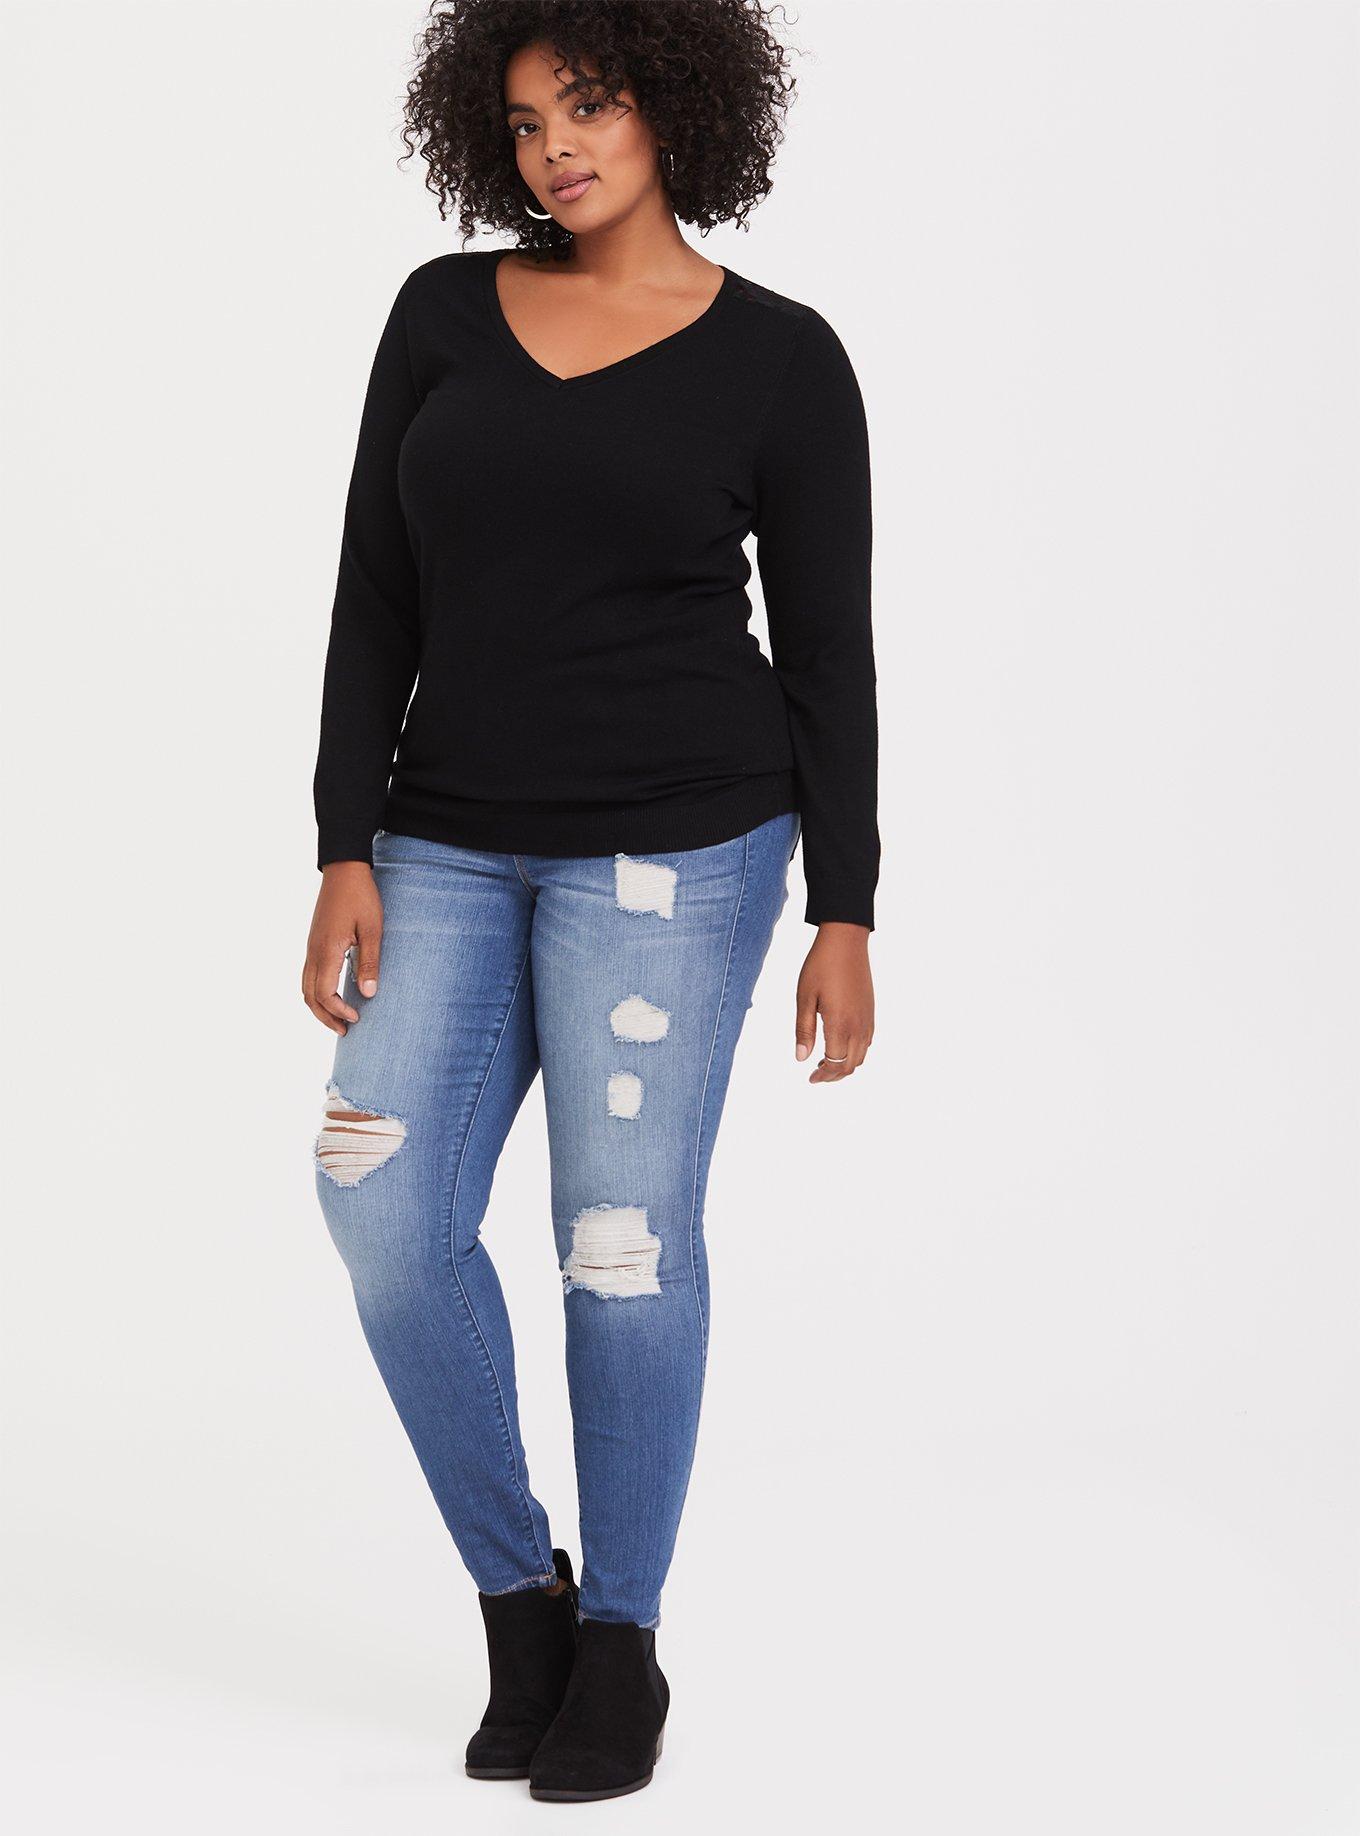 Plus Size - Black Lace Yoke Pullover Sweater - Torrid